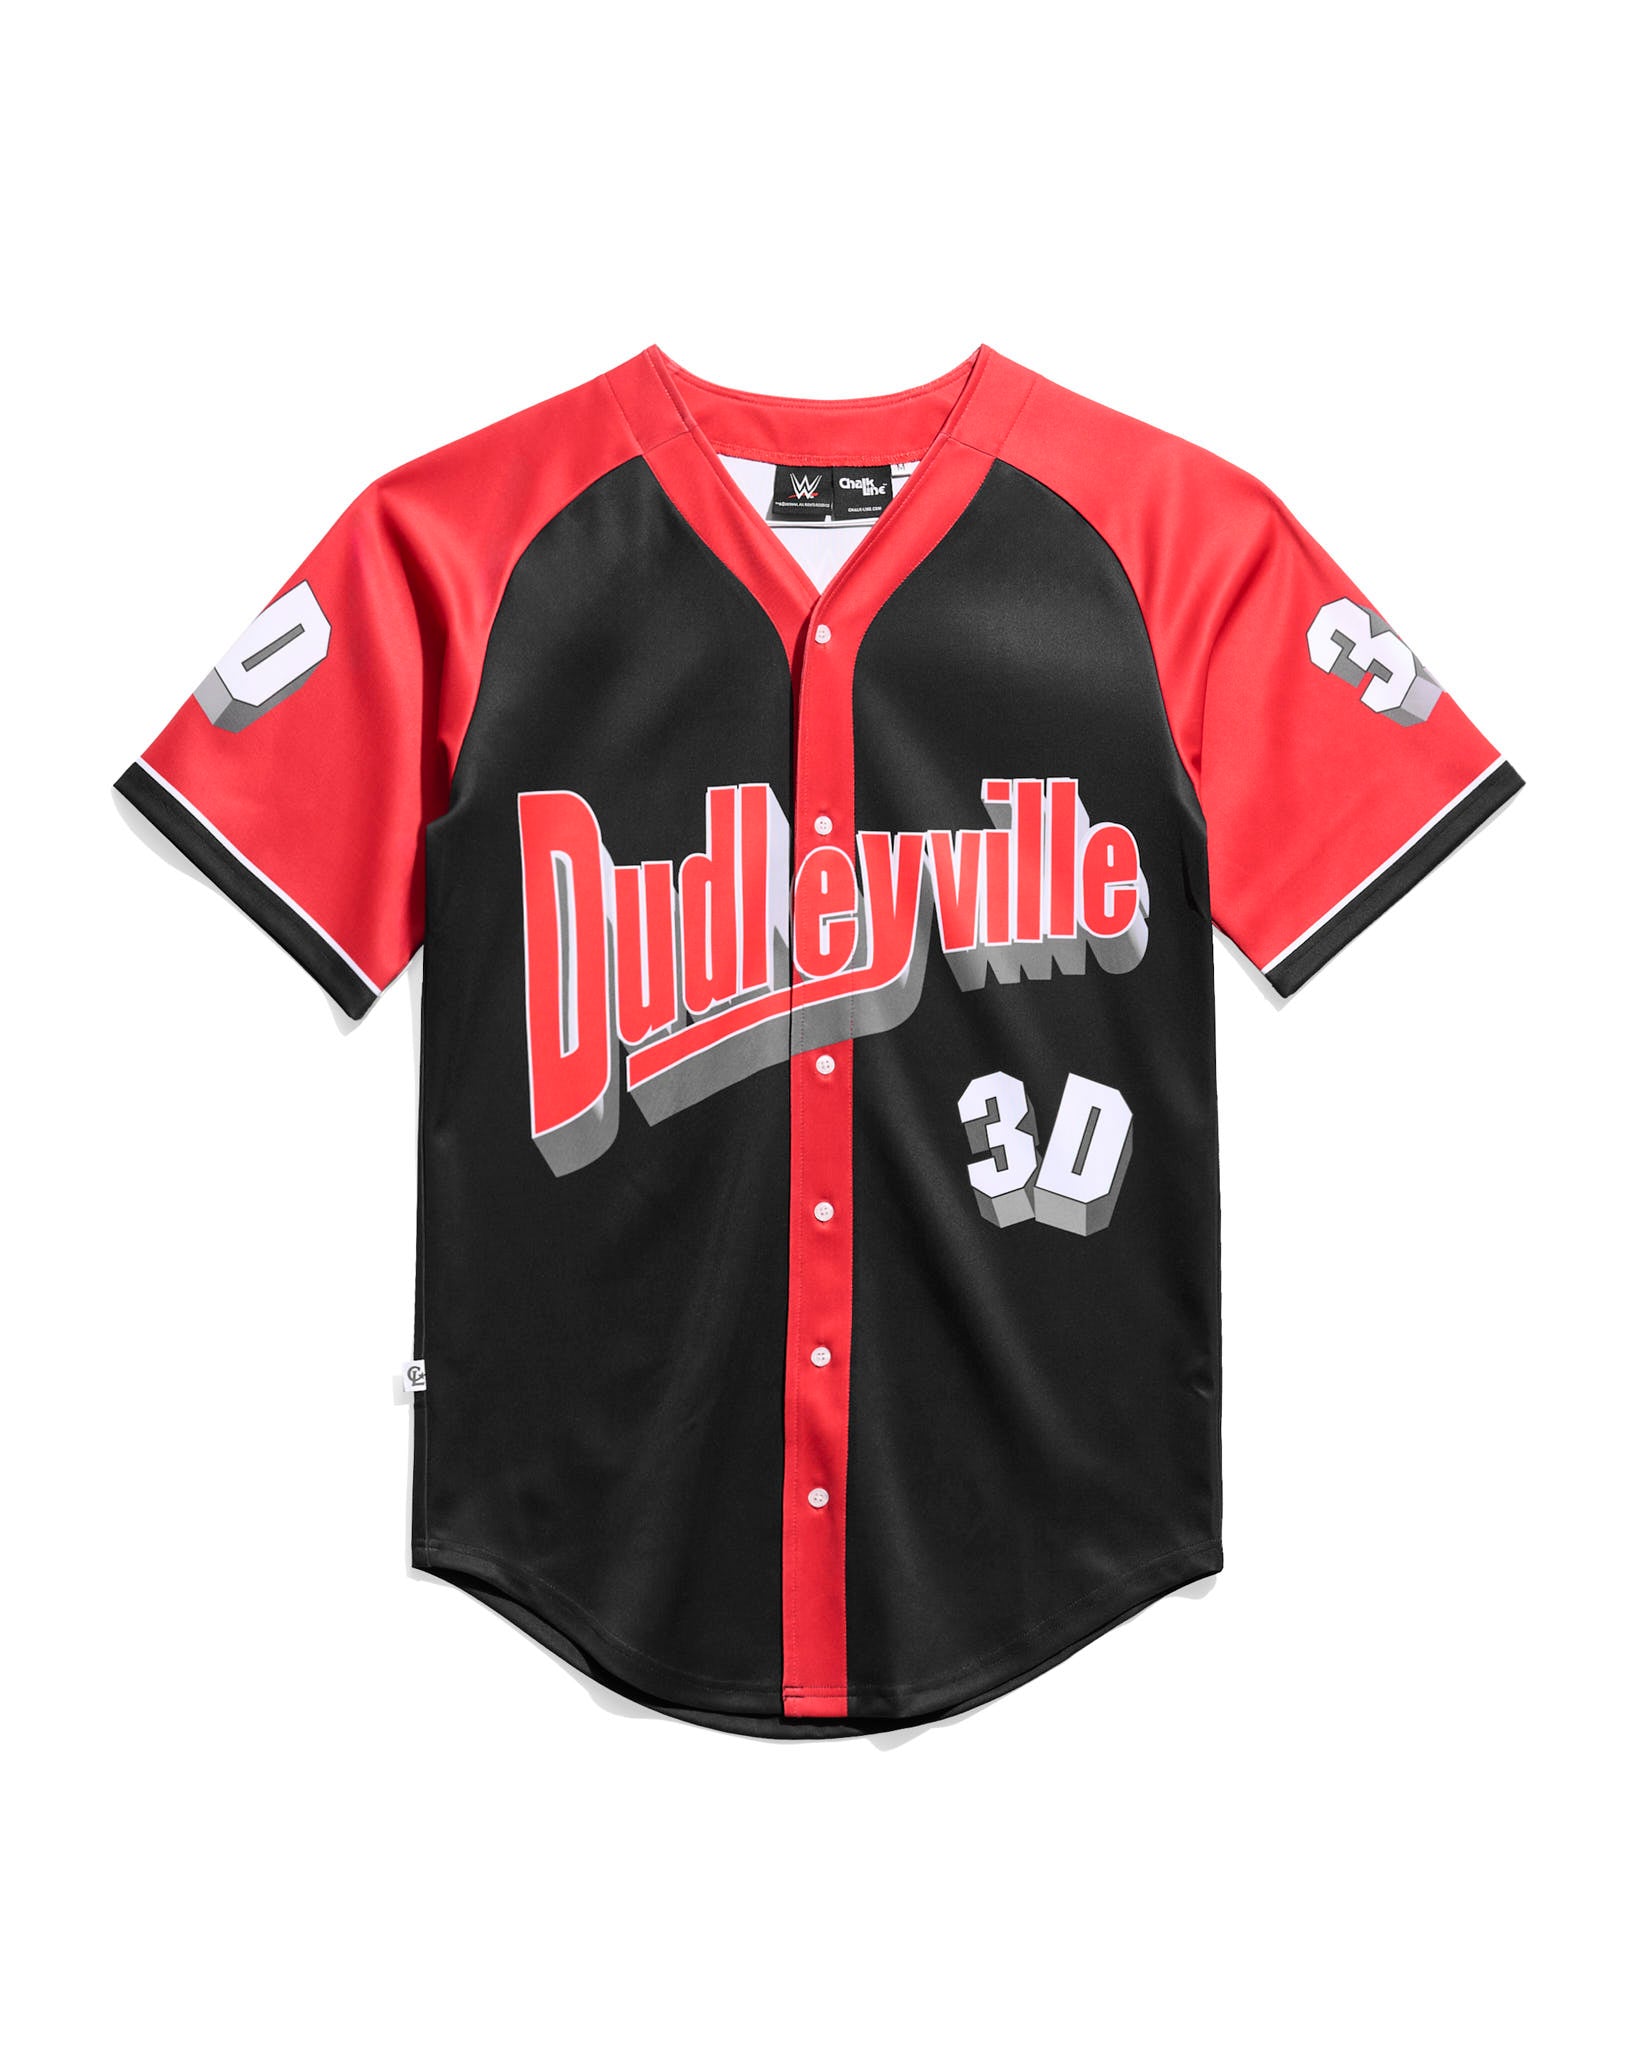 Dudley Boyz Dudleyville Baseball Jersey